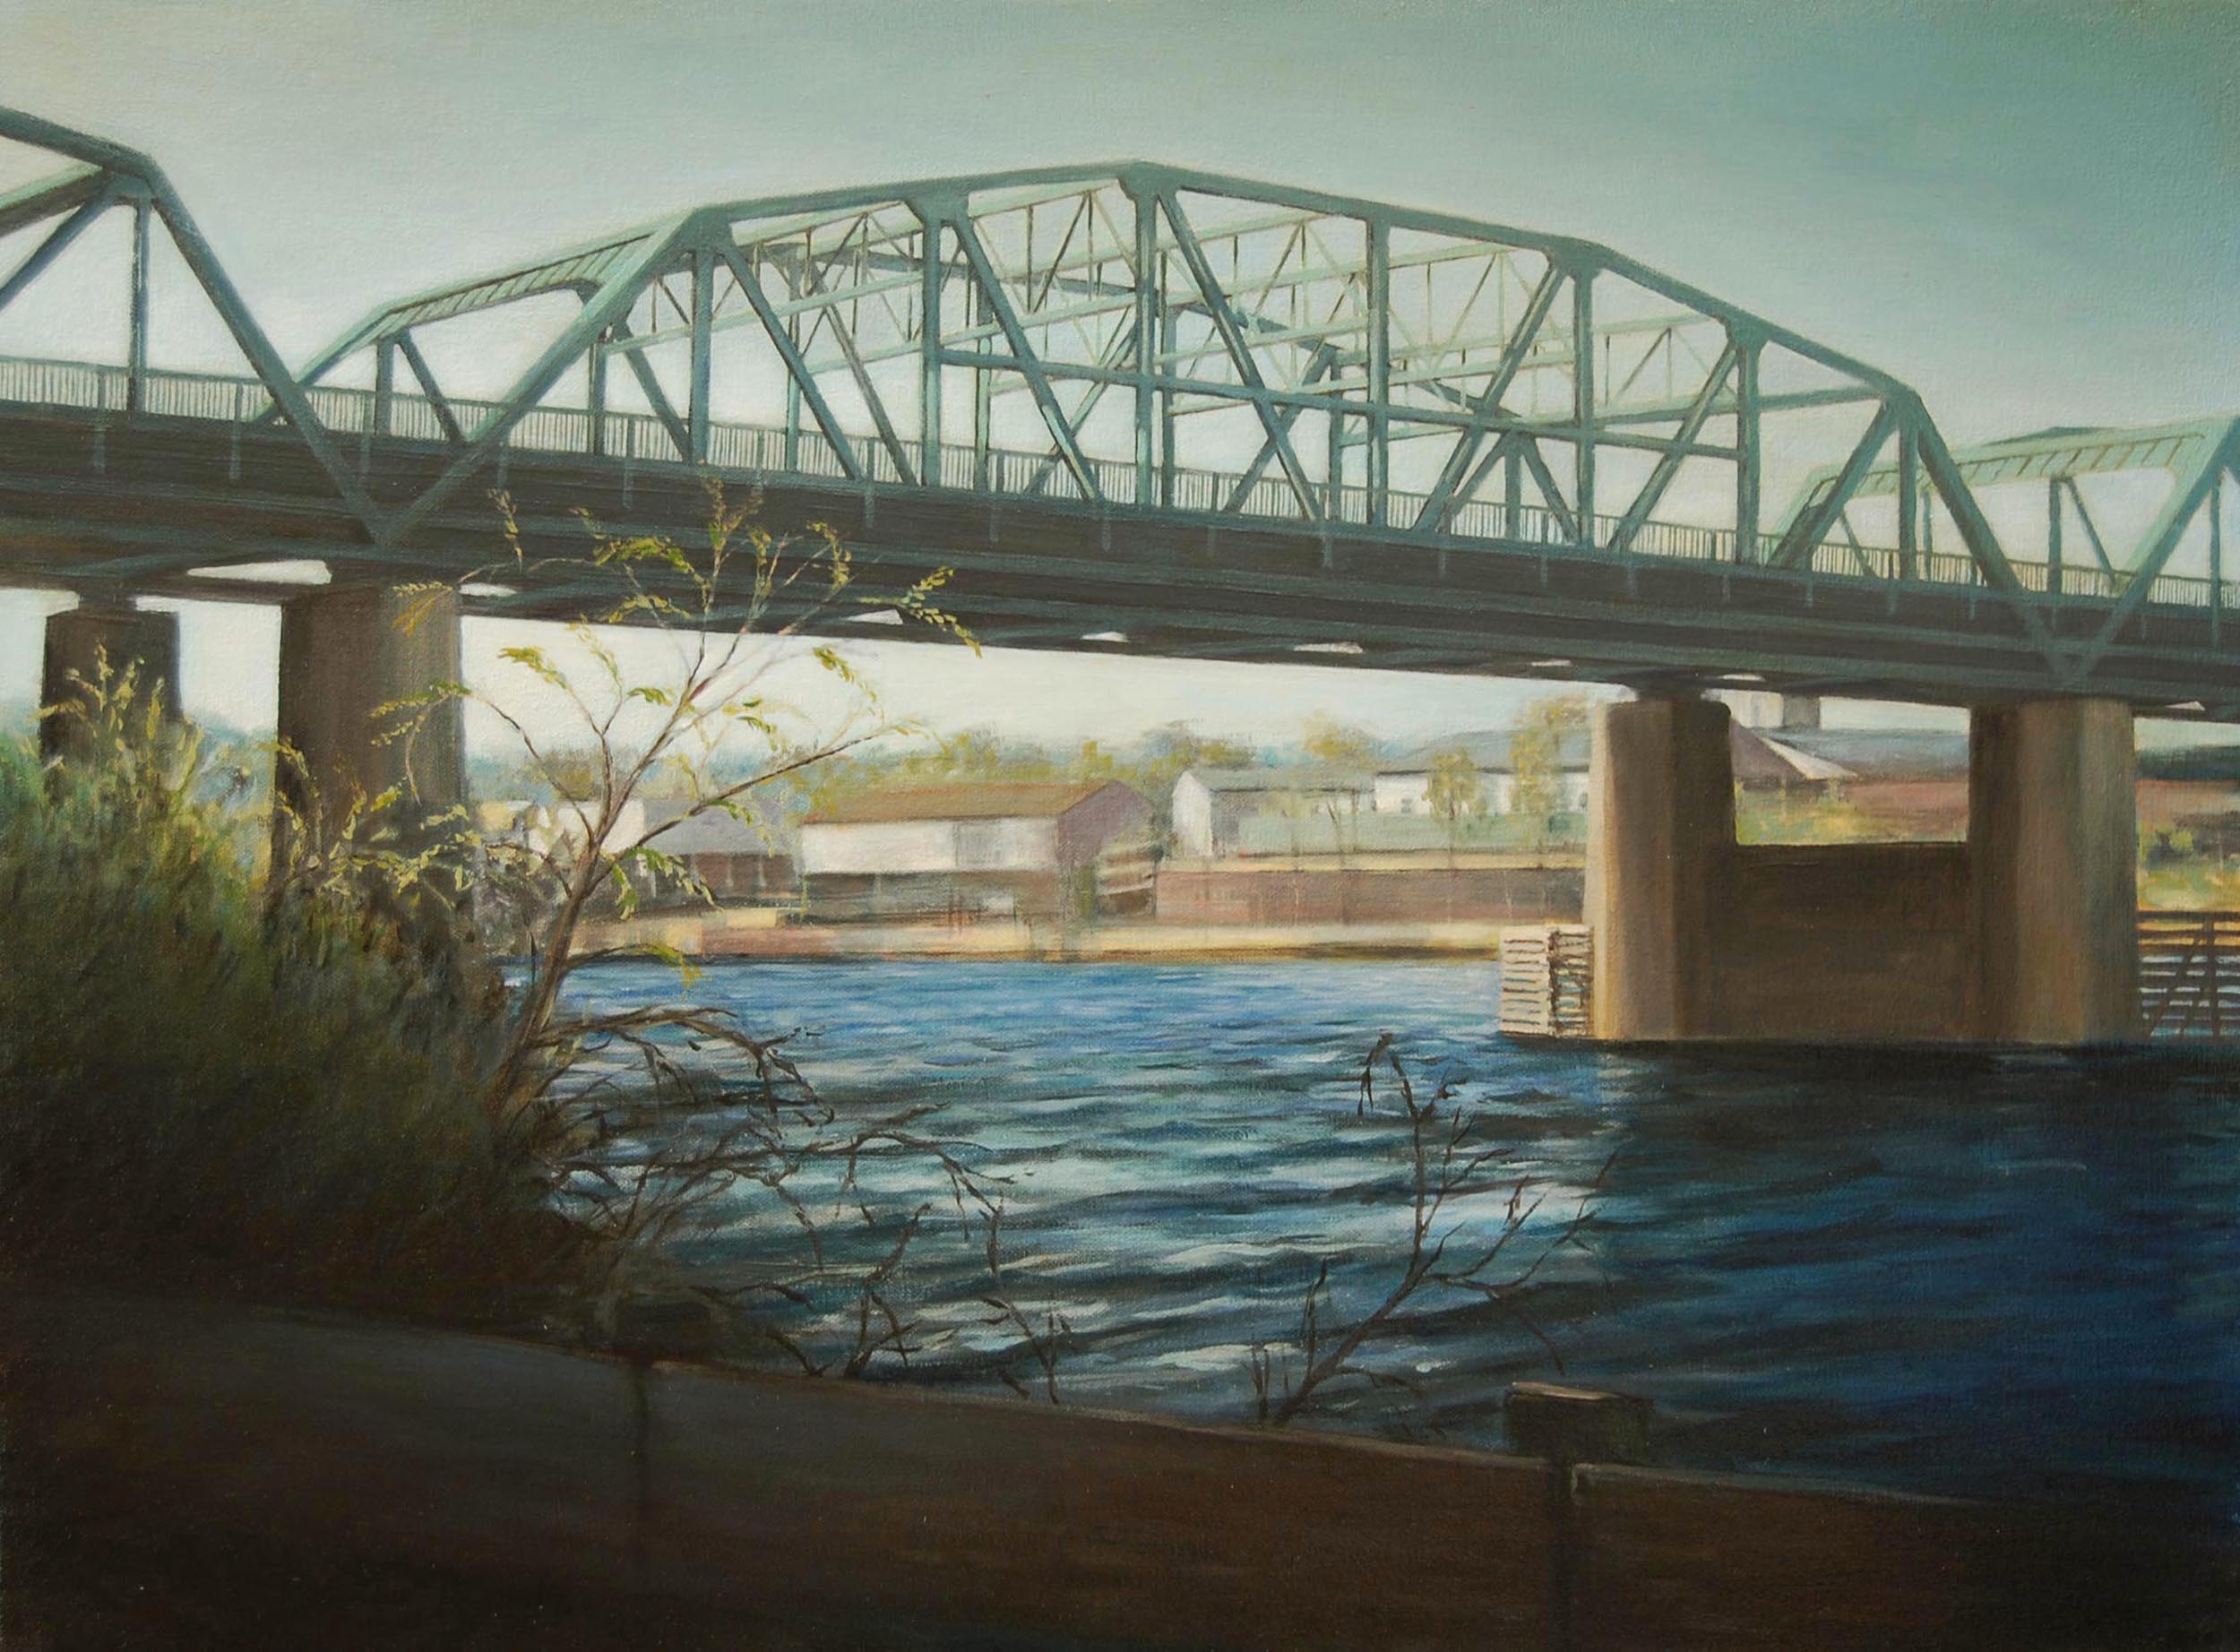   Lowry Avenue Bridge,    Minneapolis   2008  Oil on canvas  18 x 24 inches    